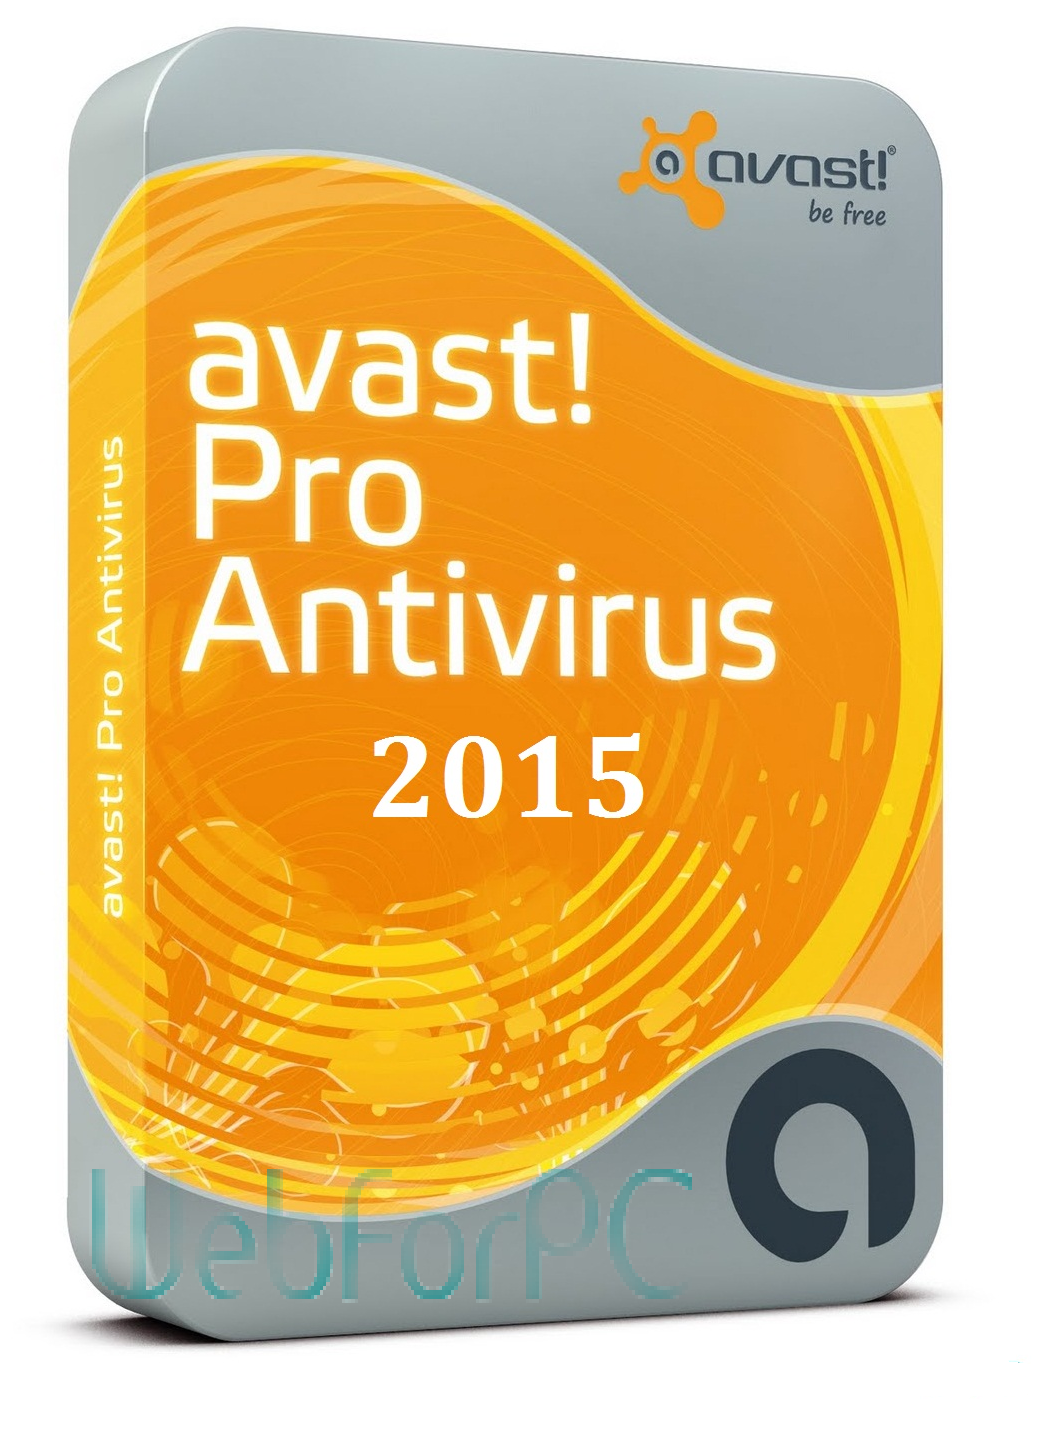 avast pro antivirus review cnet